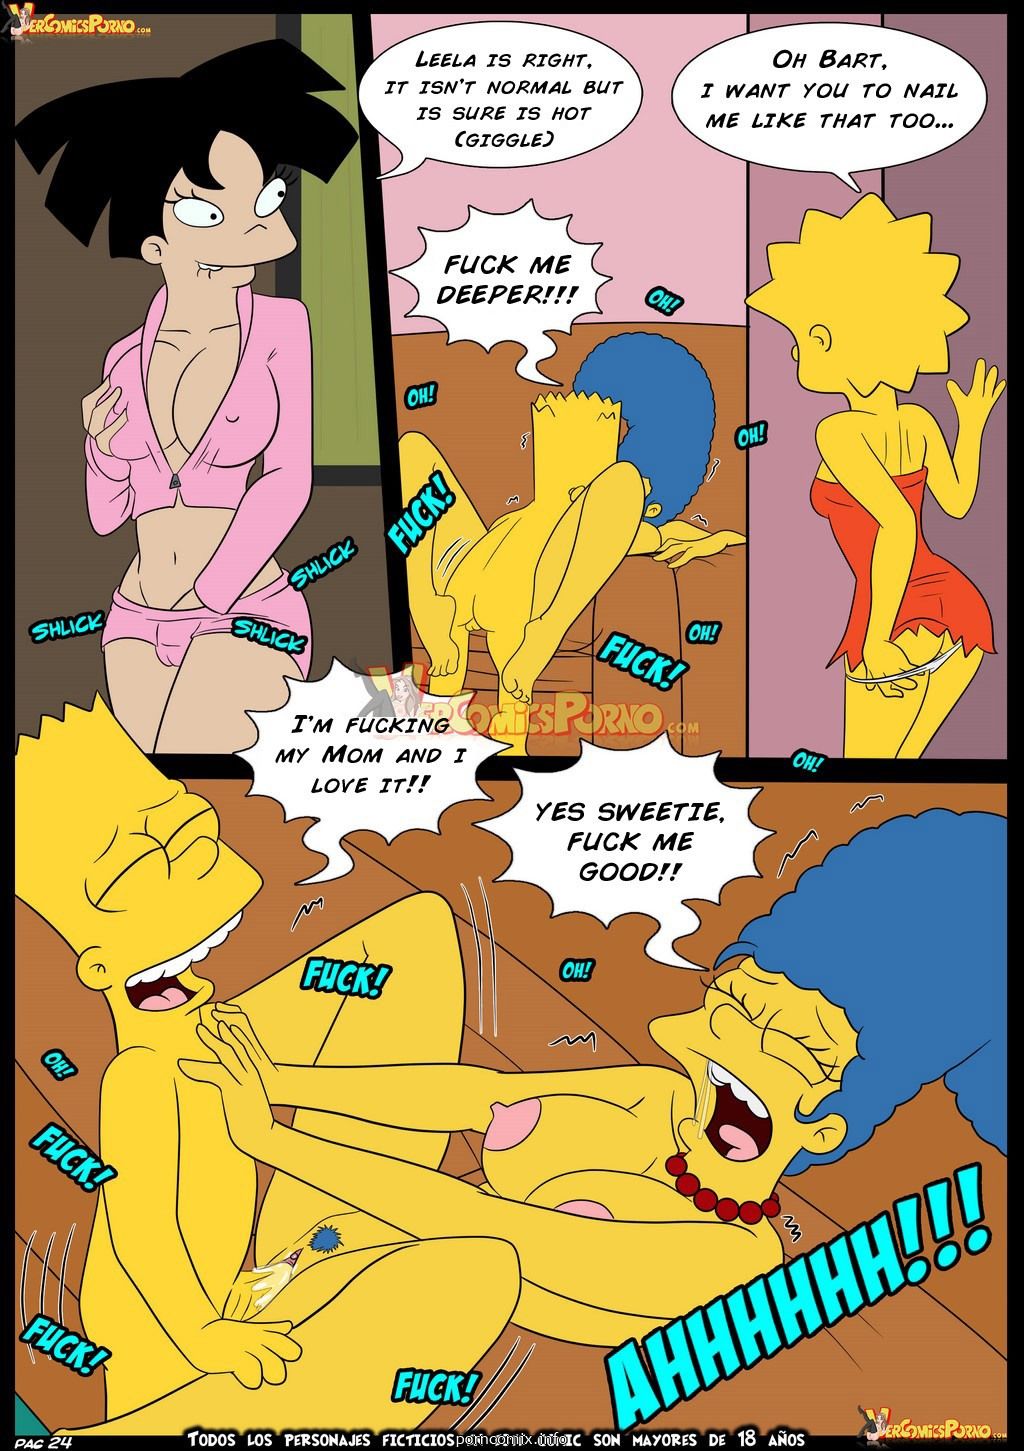 [CROC] The Simpsons / Futurama - Future purchase page 25